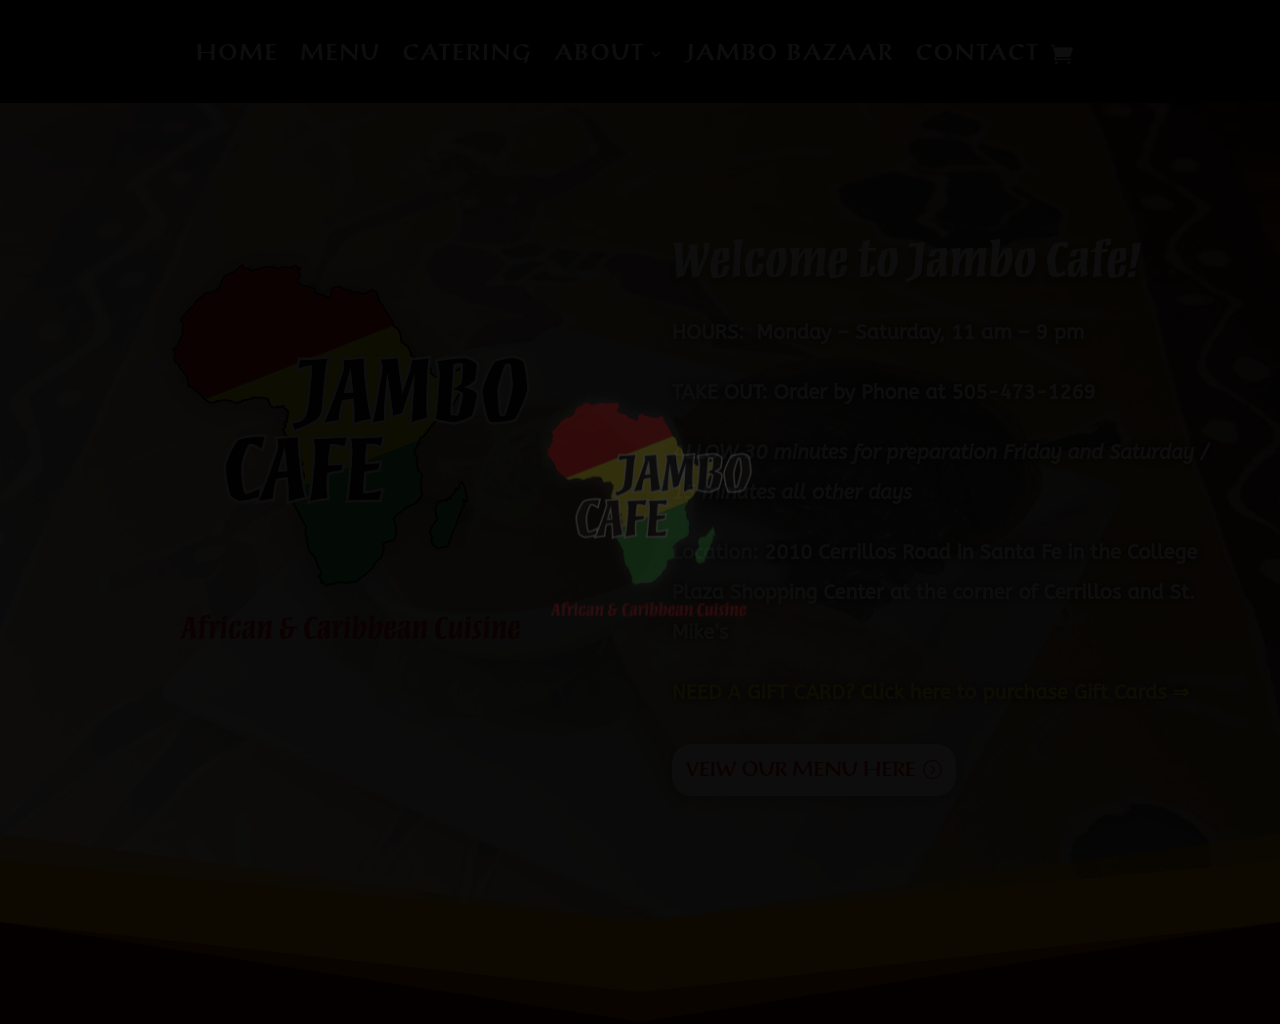 jambocafe.net